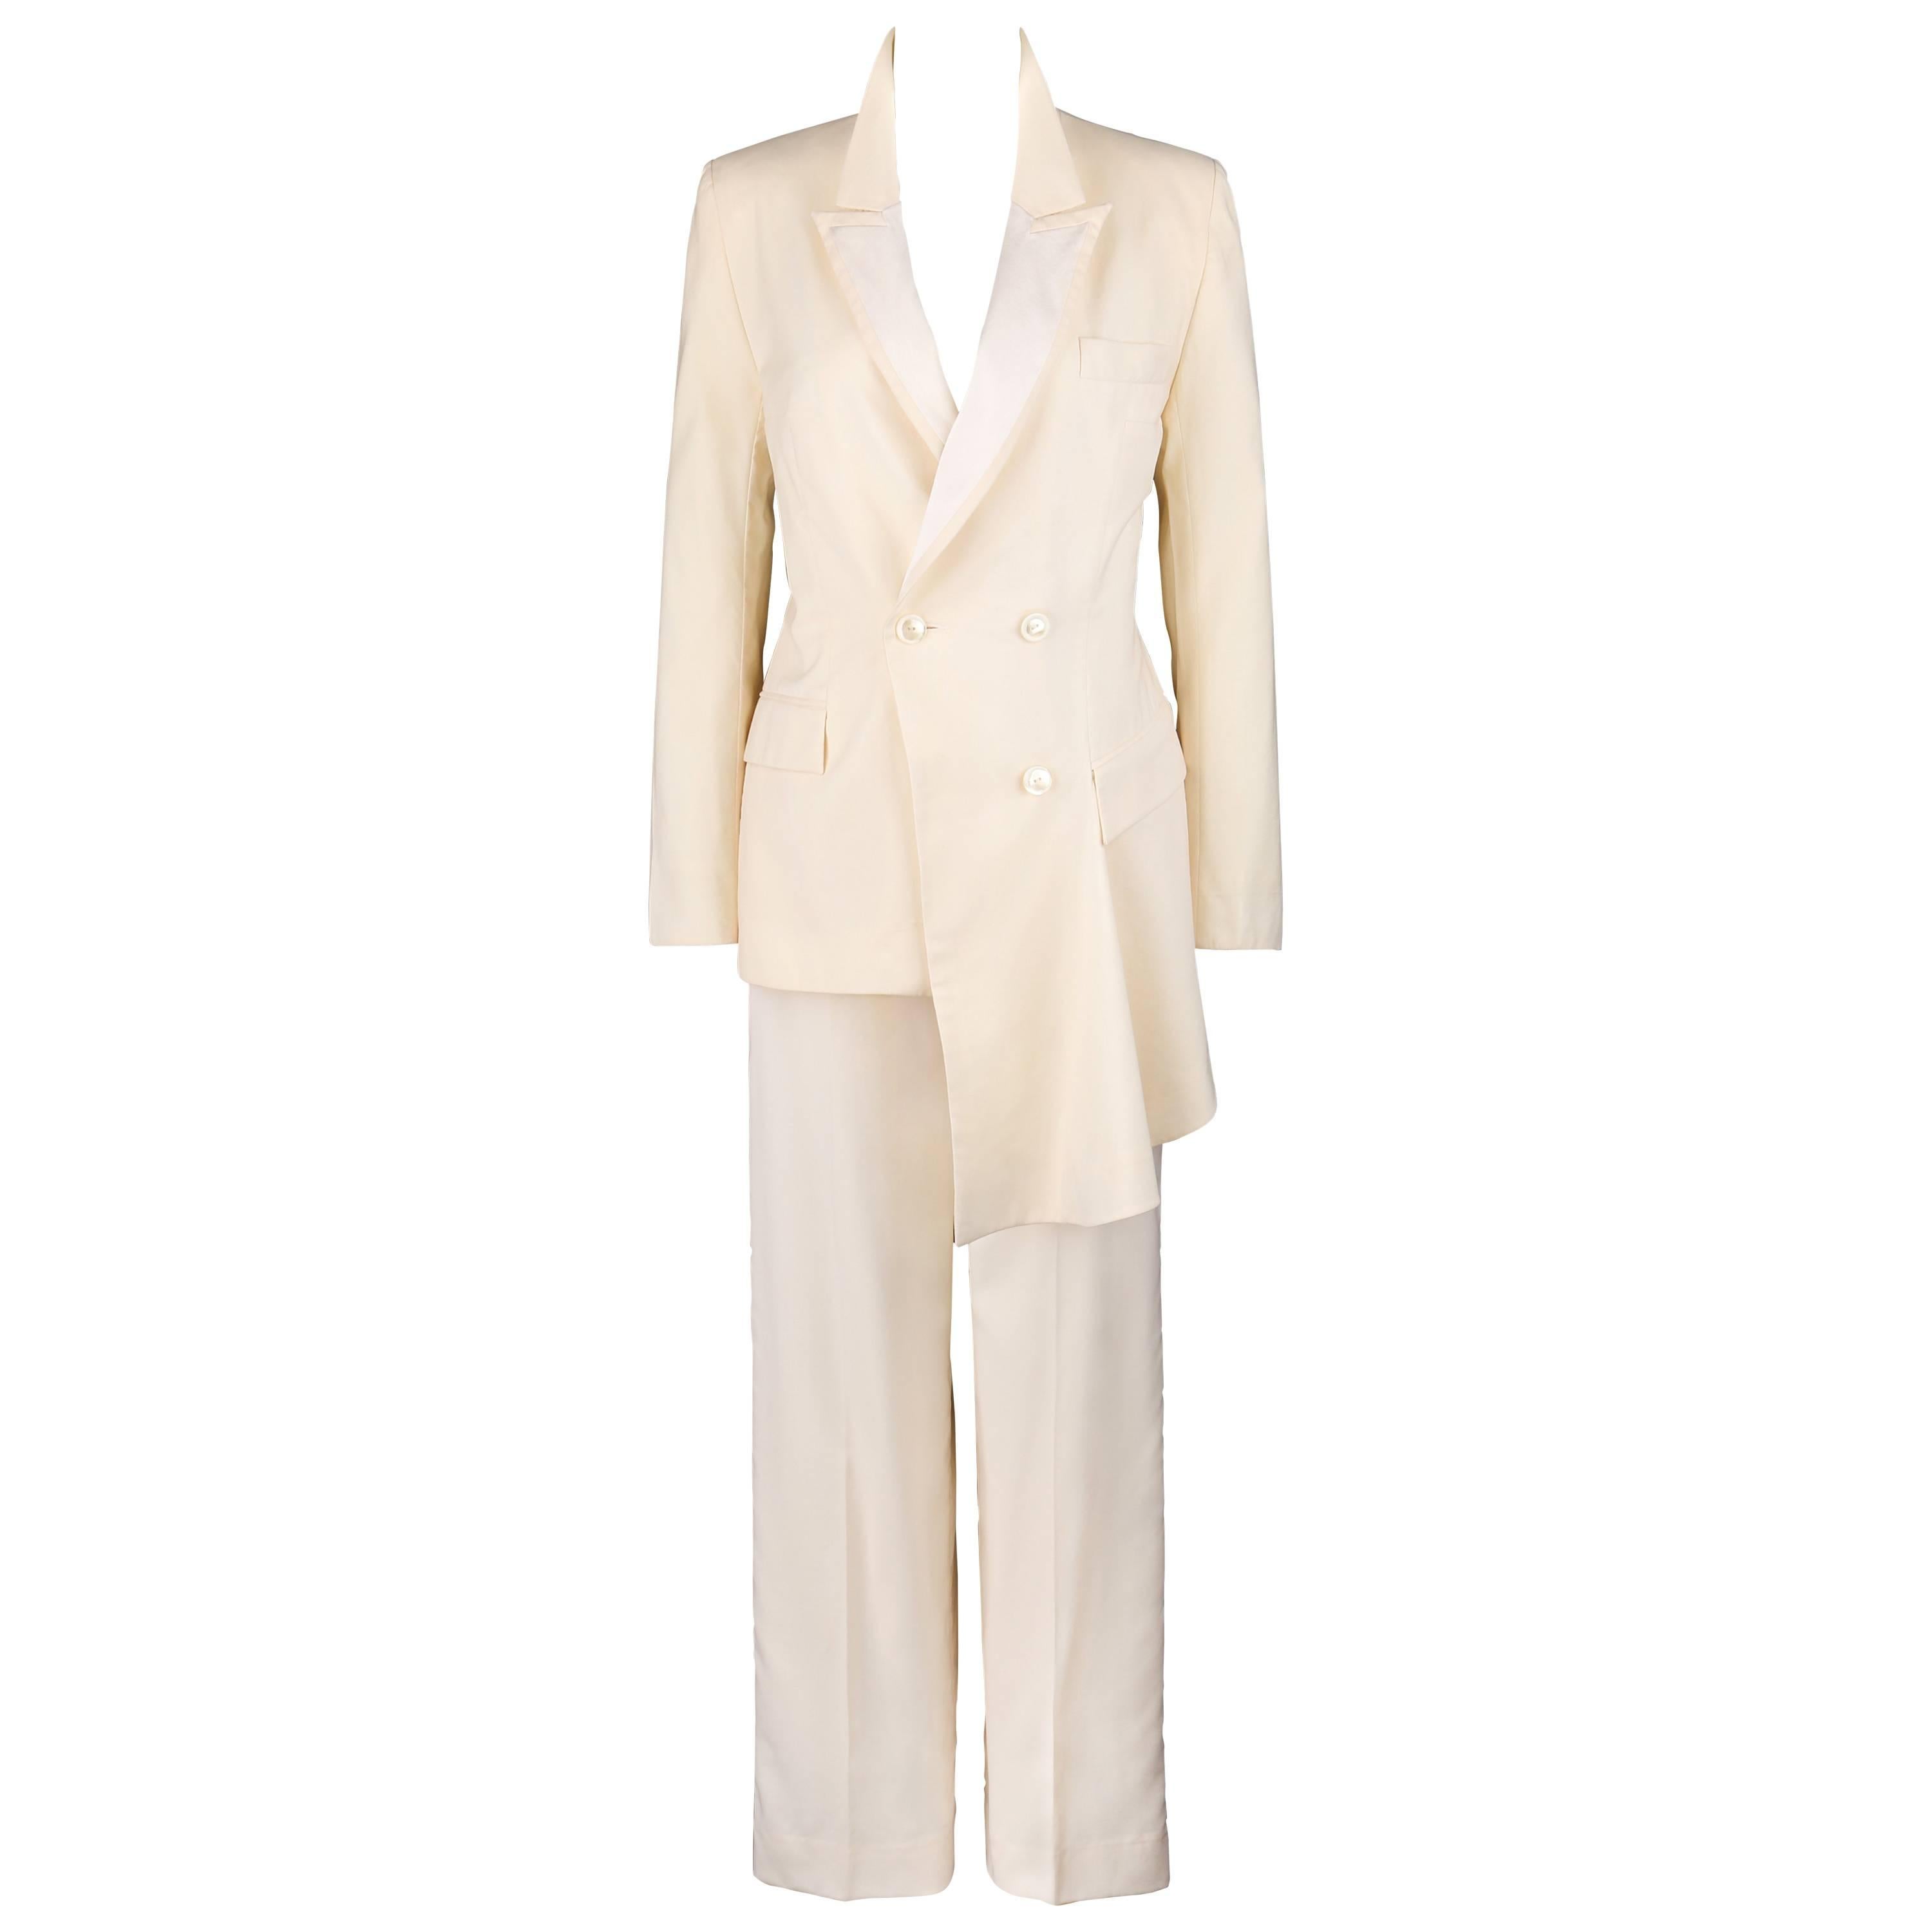 GIVENCHY Couture S/S 1999 ALEXANDER McQUEEN 2 Piece Tuxedo Jacket Pant Suit Set